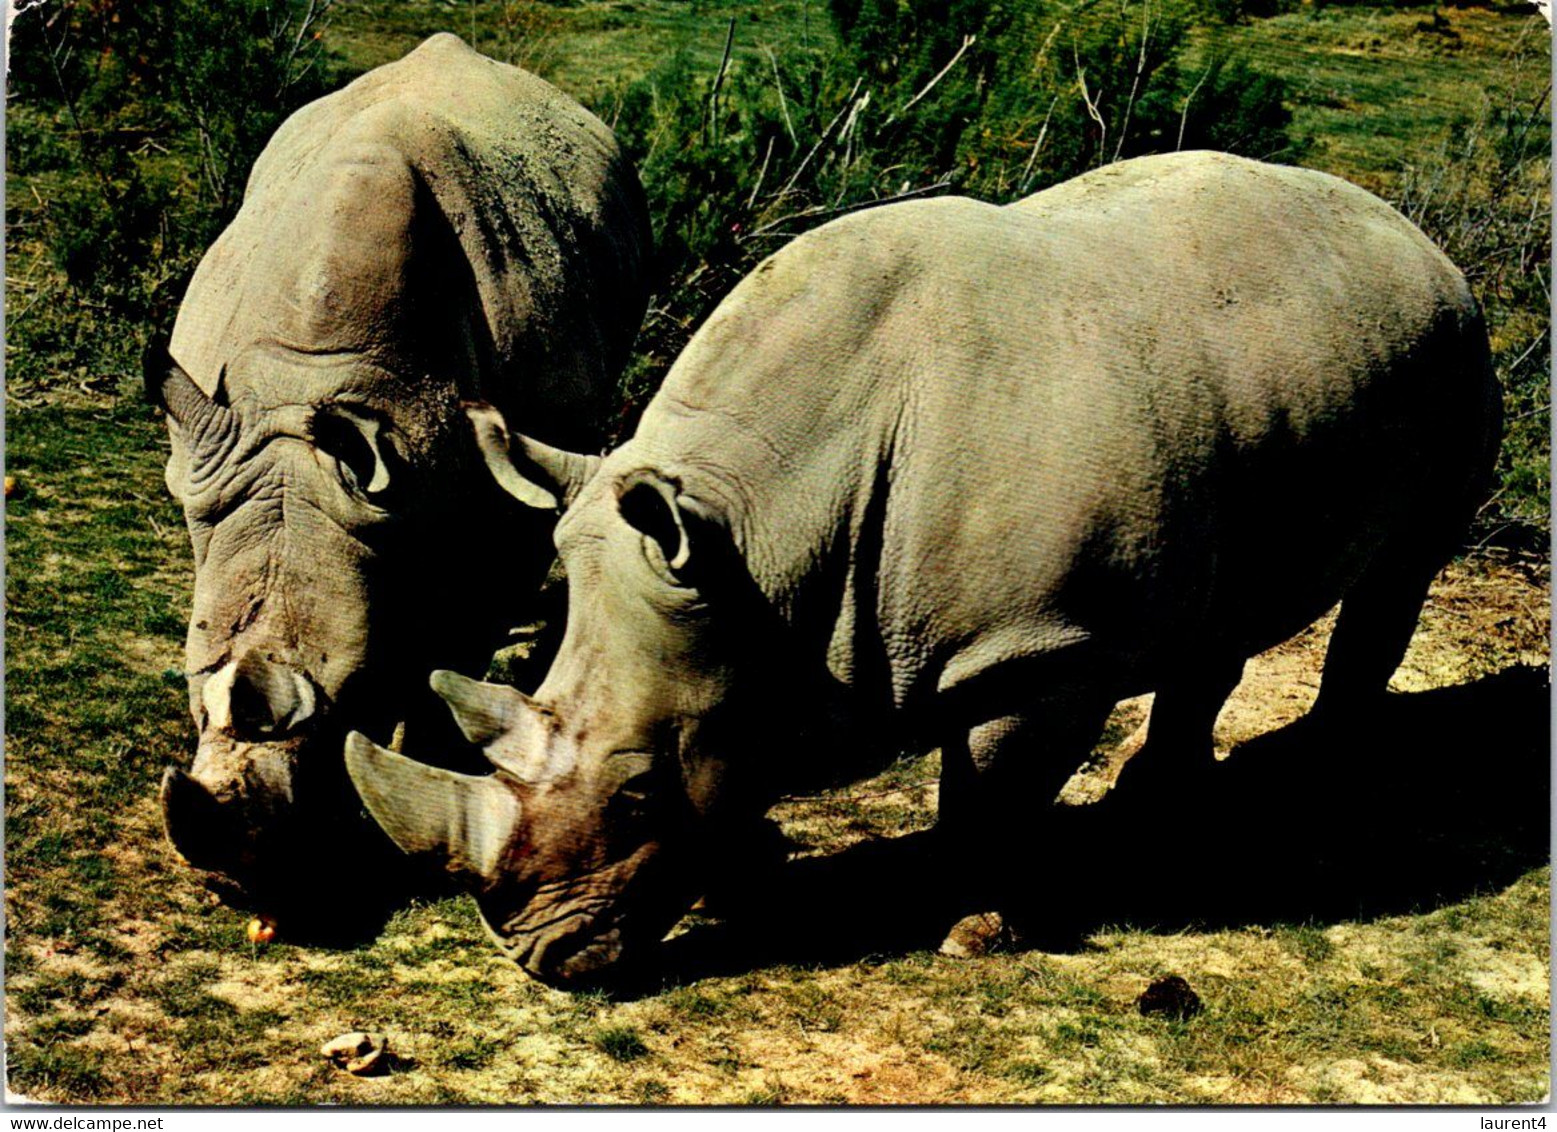 (2 M 10) (M+S) France - Sigean Nature Reserve (ZOO) Rhinocéros - Rhinocéros